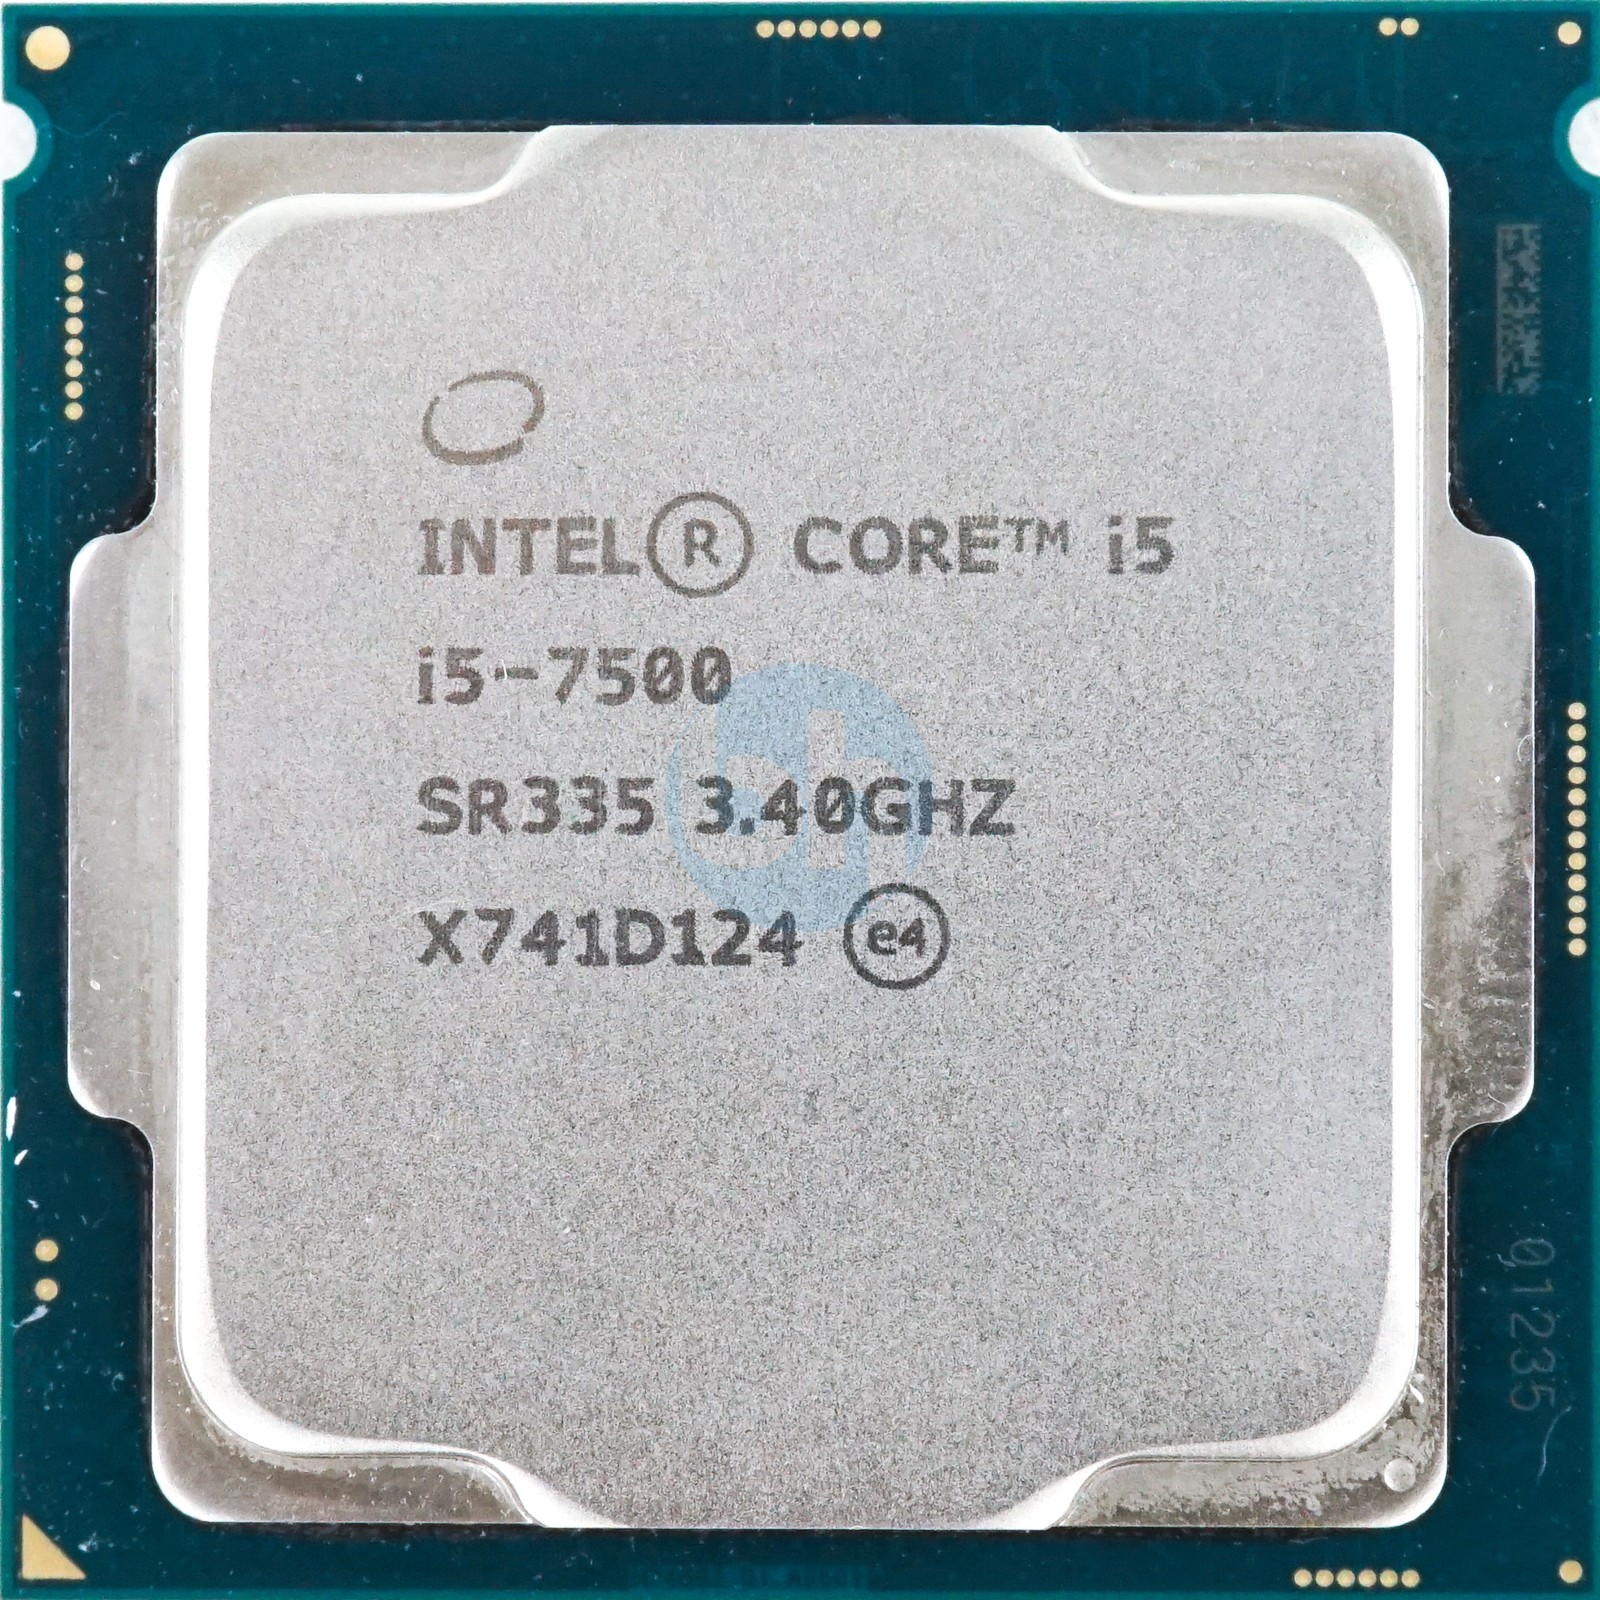 Intel Core i5-7500 (SR335) 3.40Ghz Quad (4) Core LGA1151 65W 6MB CPU